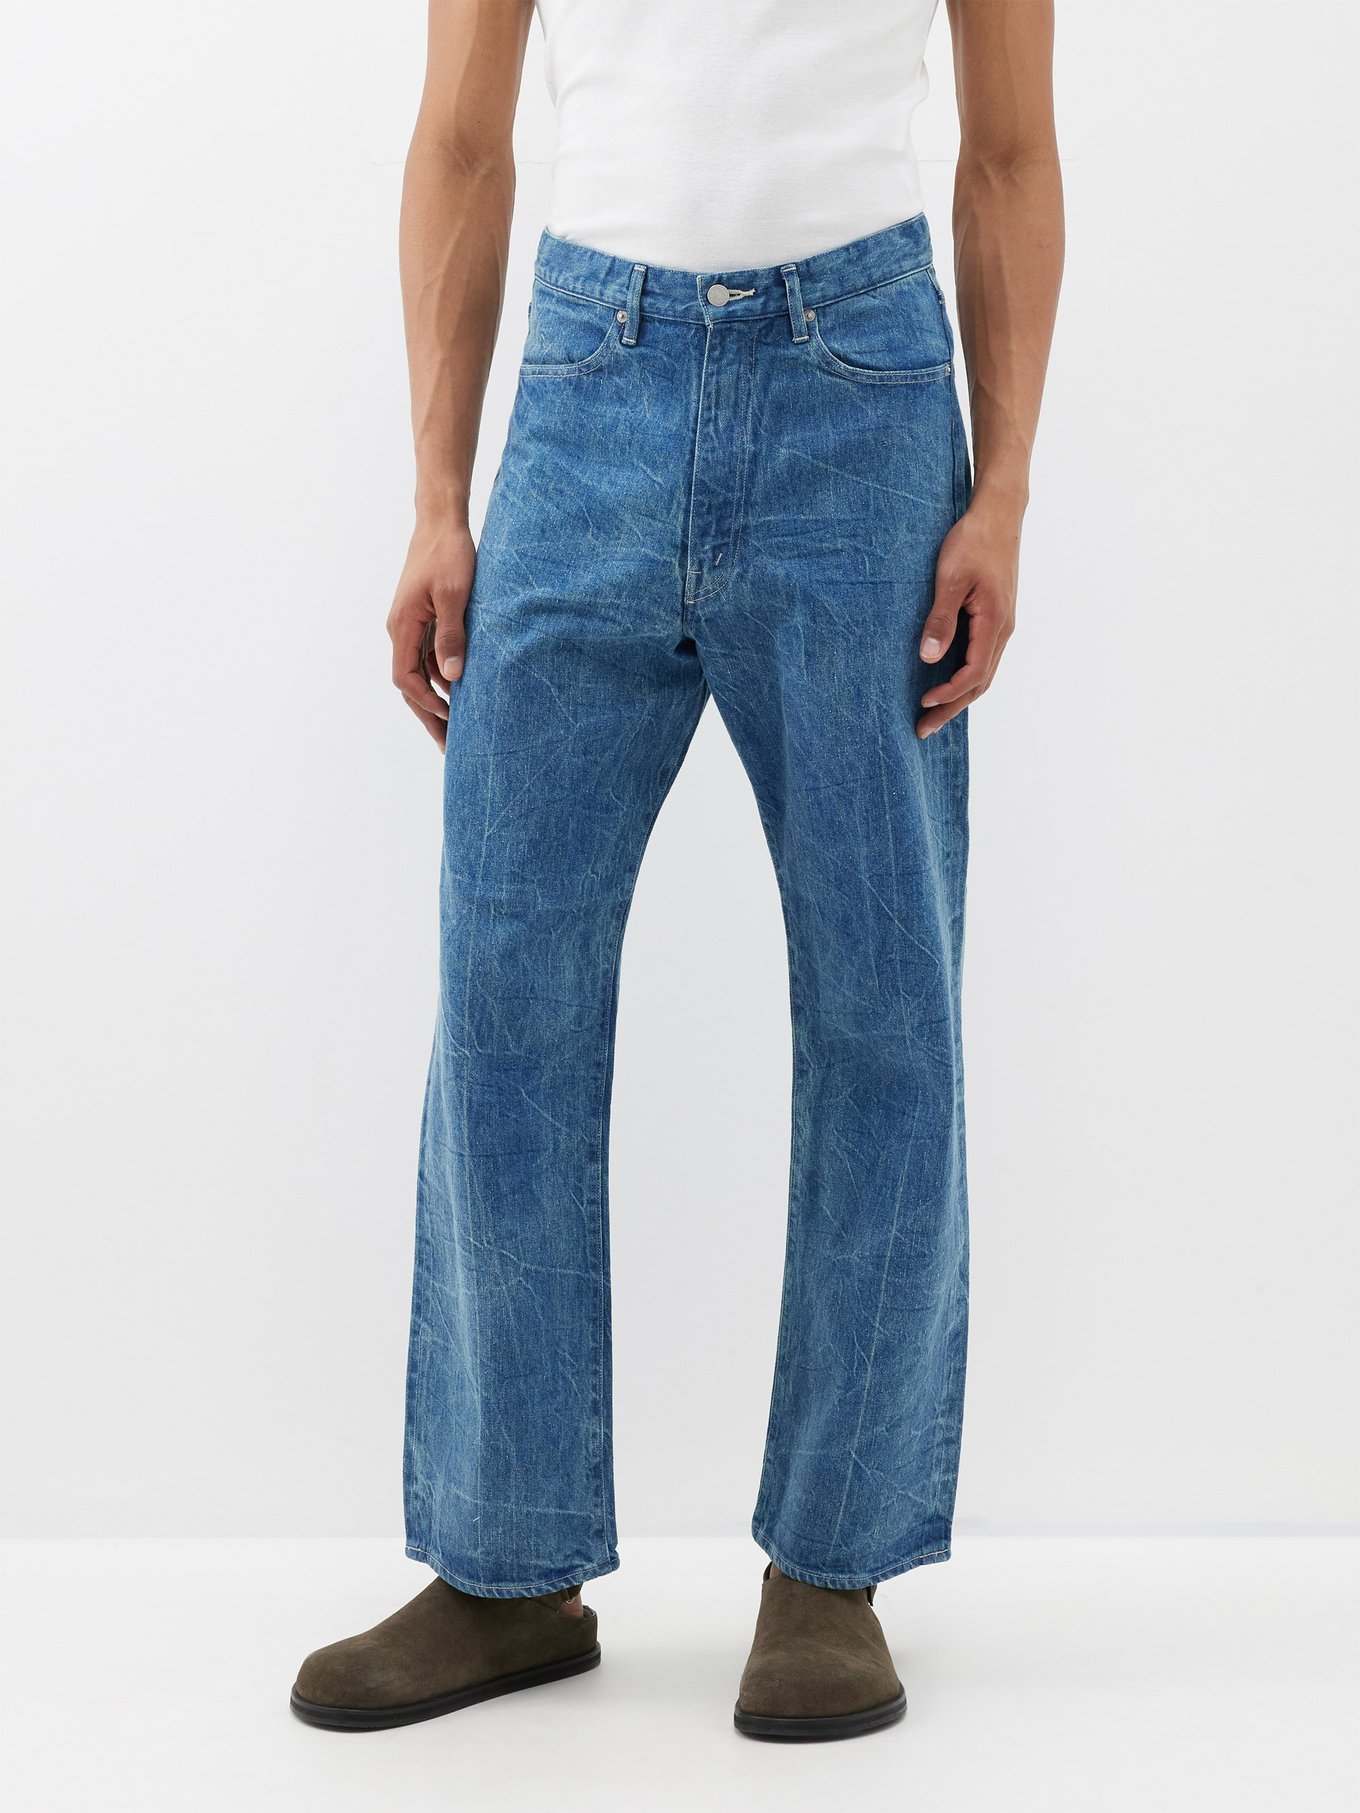 Distressed selvedge-denim jeans video